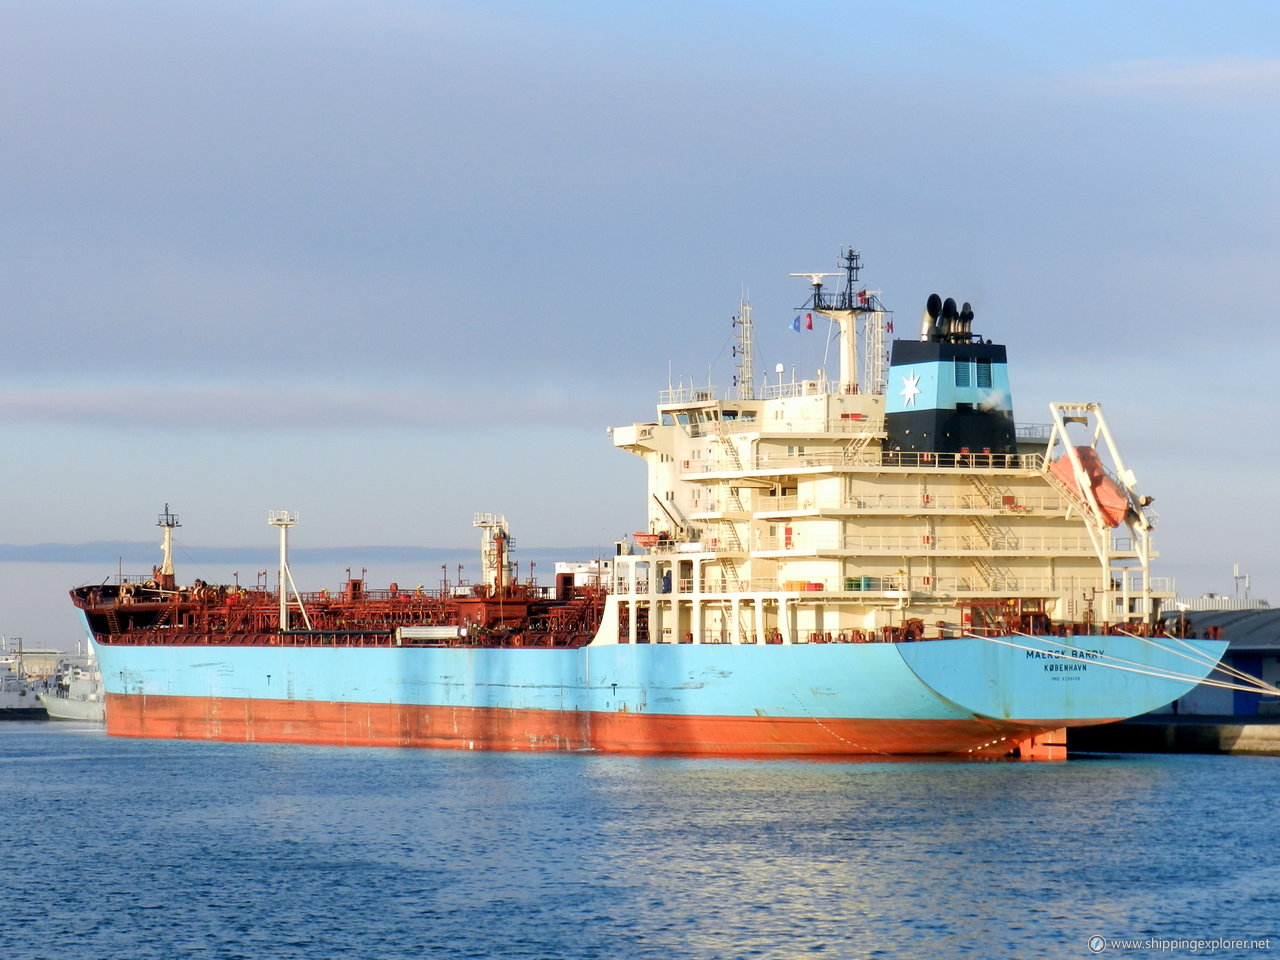 Maersk Barry